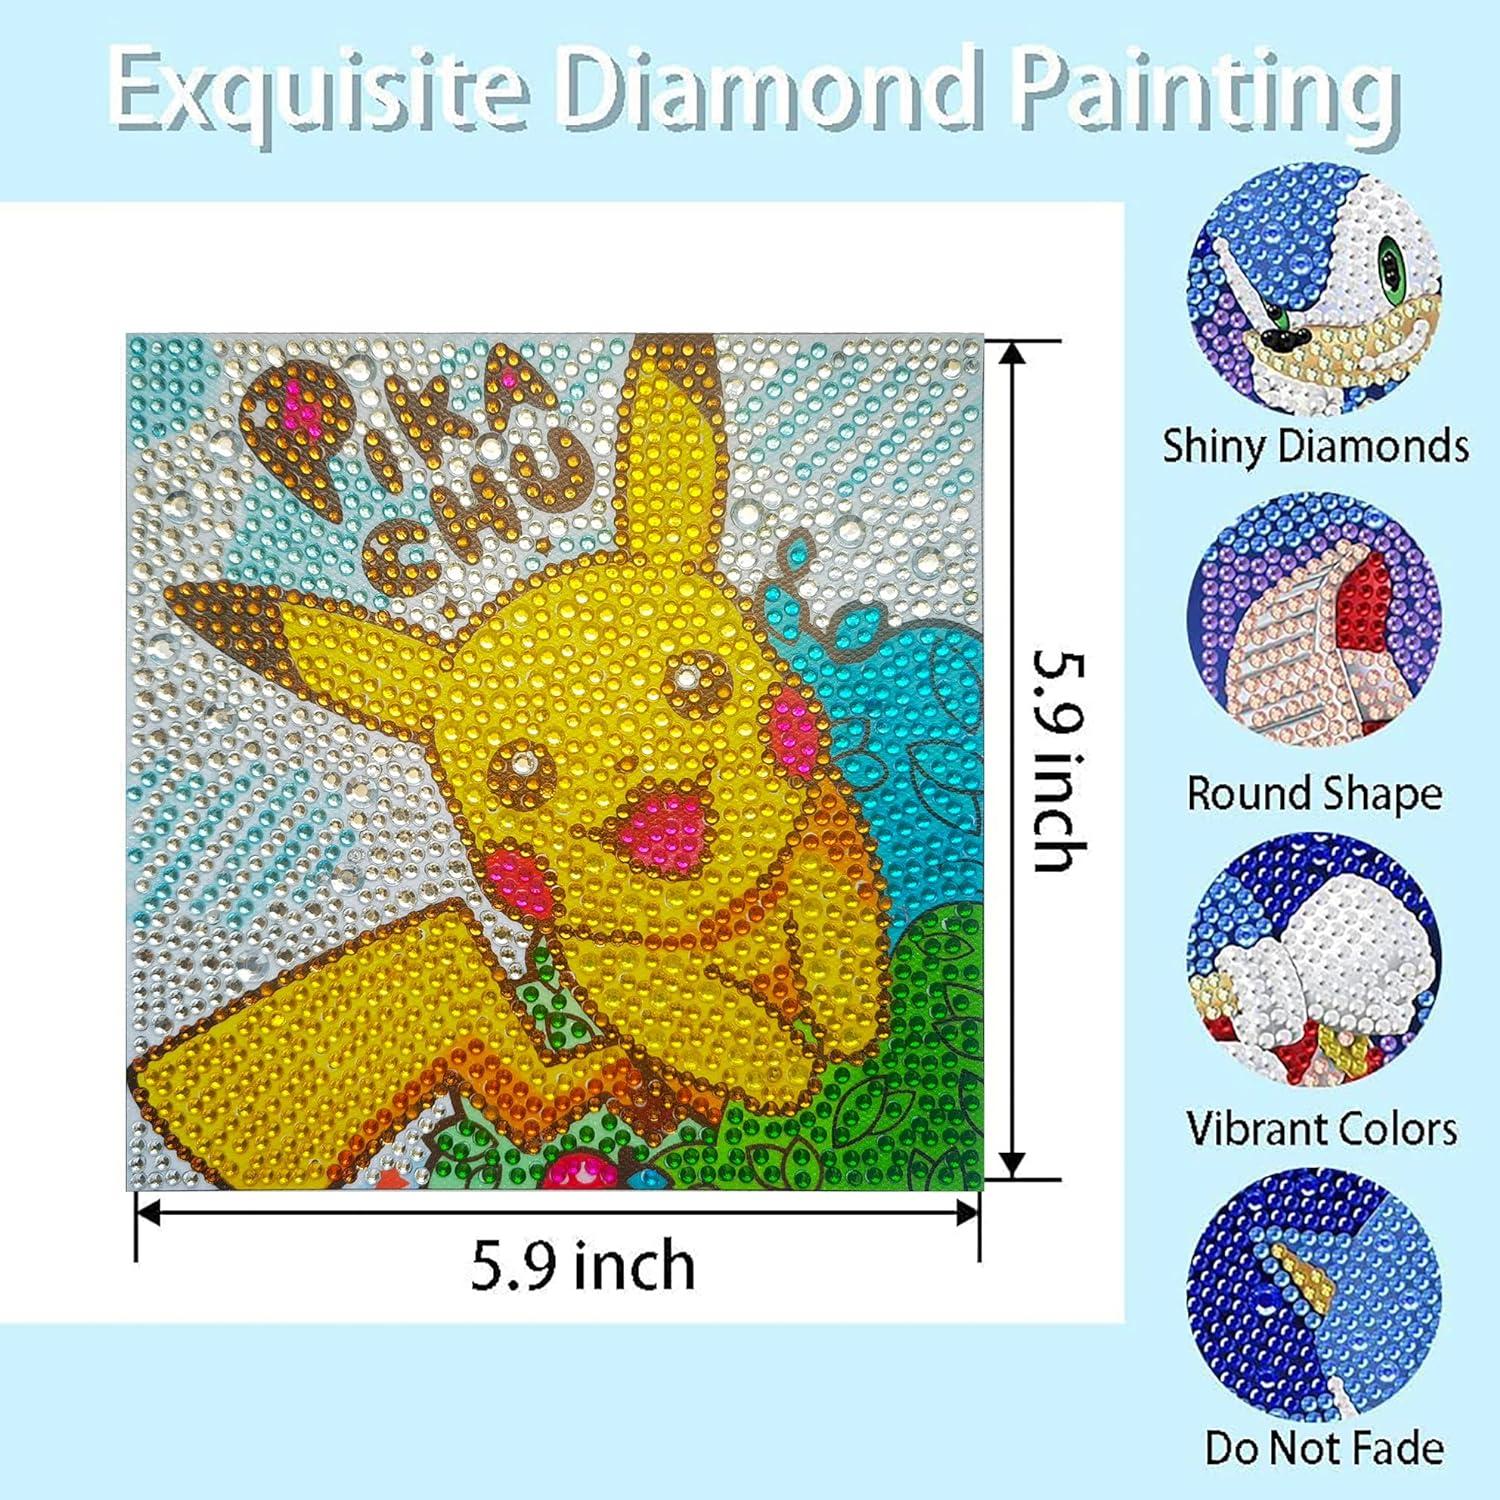 Pokémon - Full Diamond Painting (time lapse) 